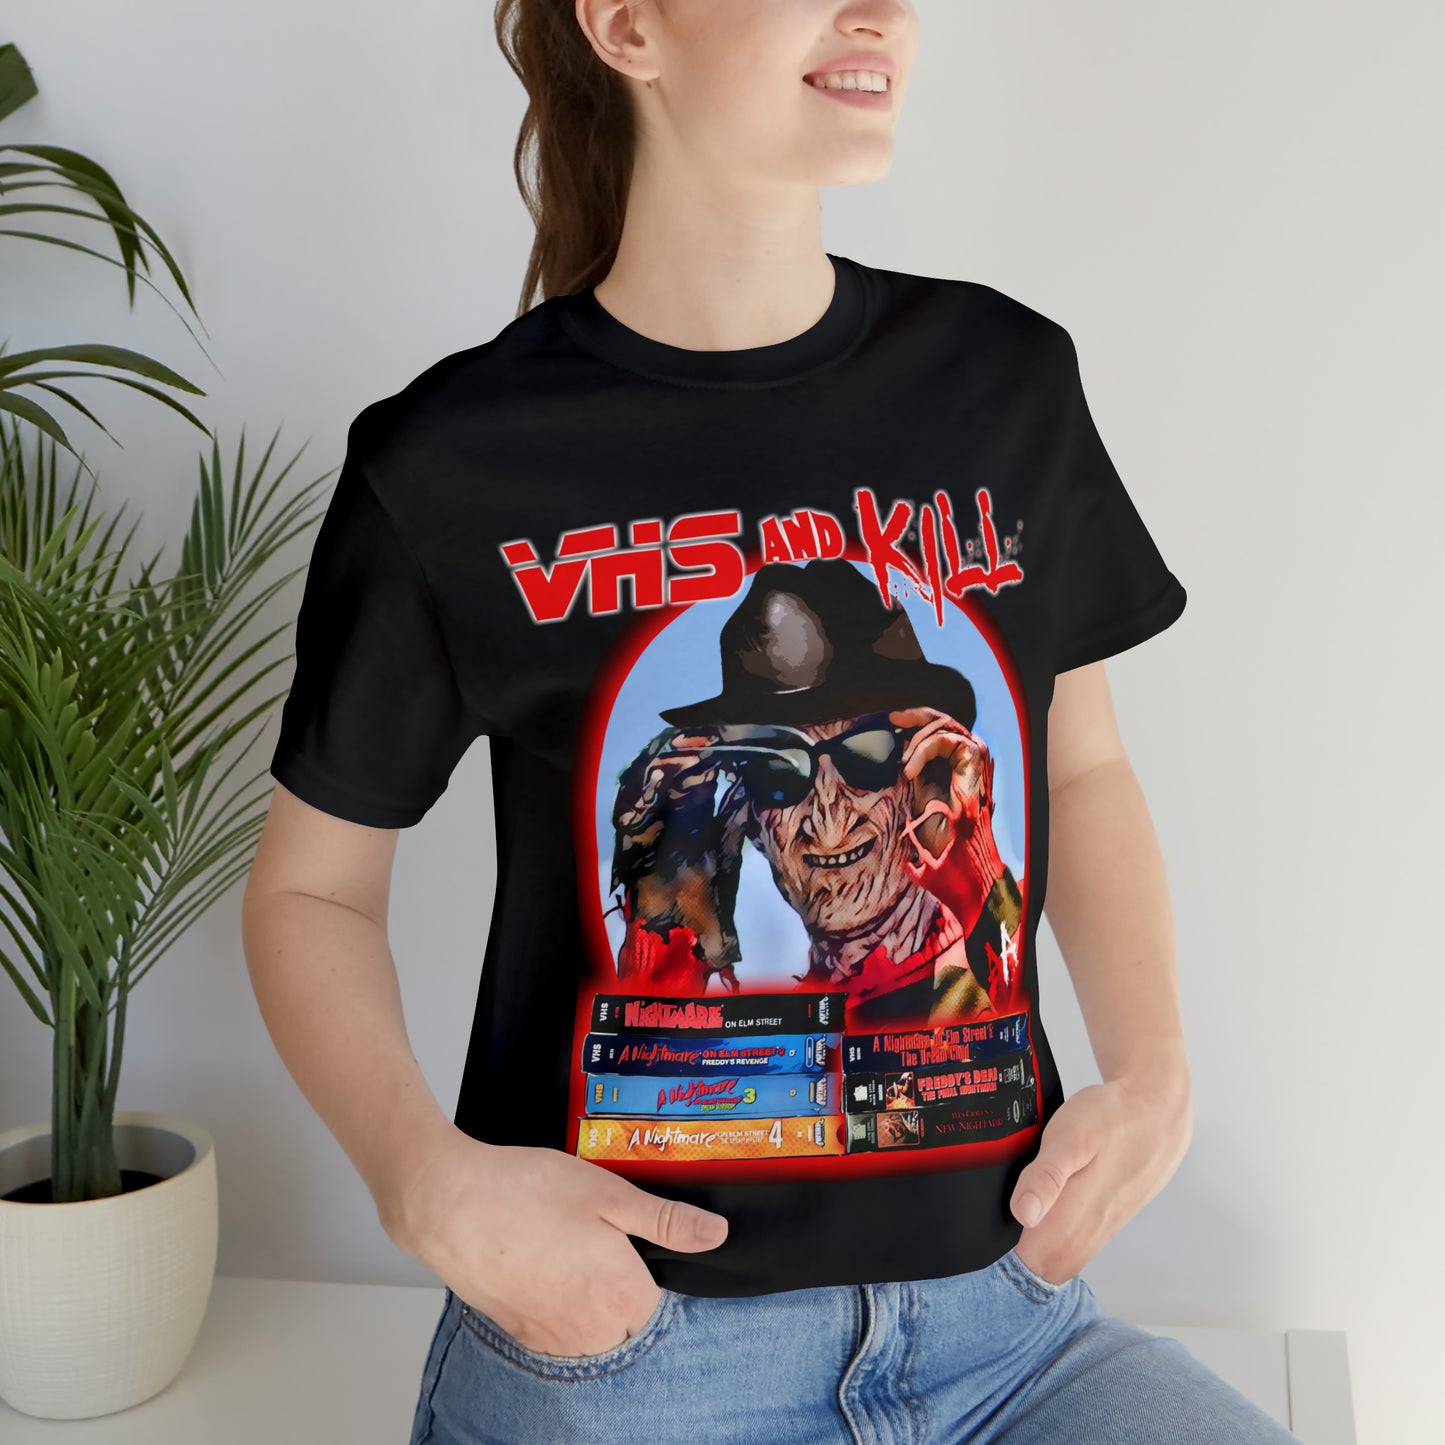 VHS and Kill Freddy Krueger Tee - Embrace Retro Horror Vibes - thenightmareinc